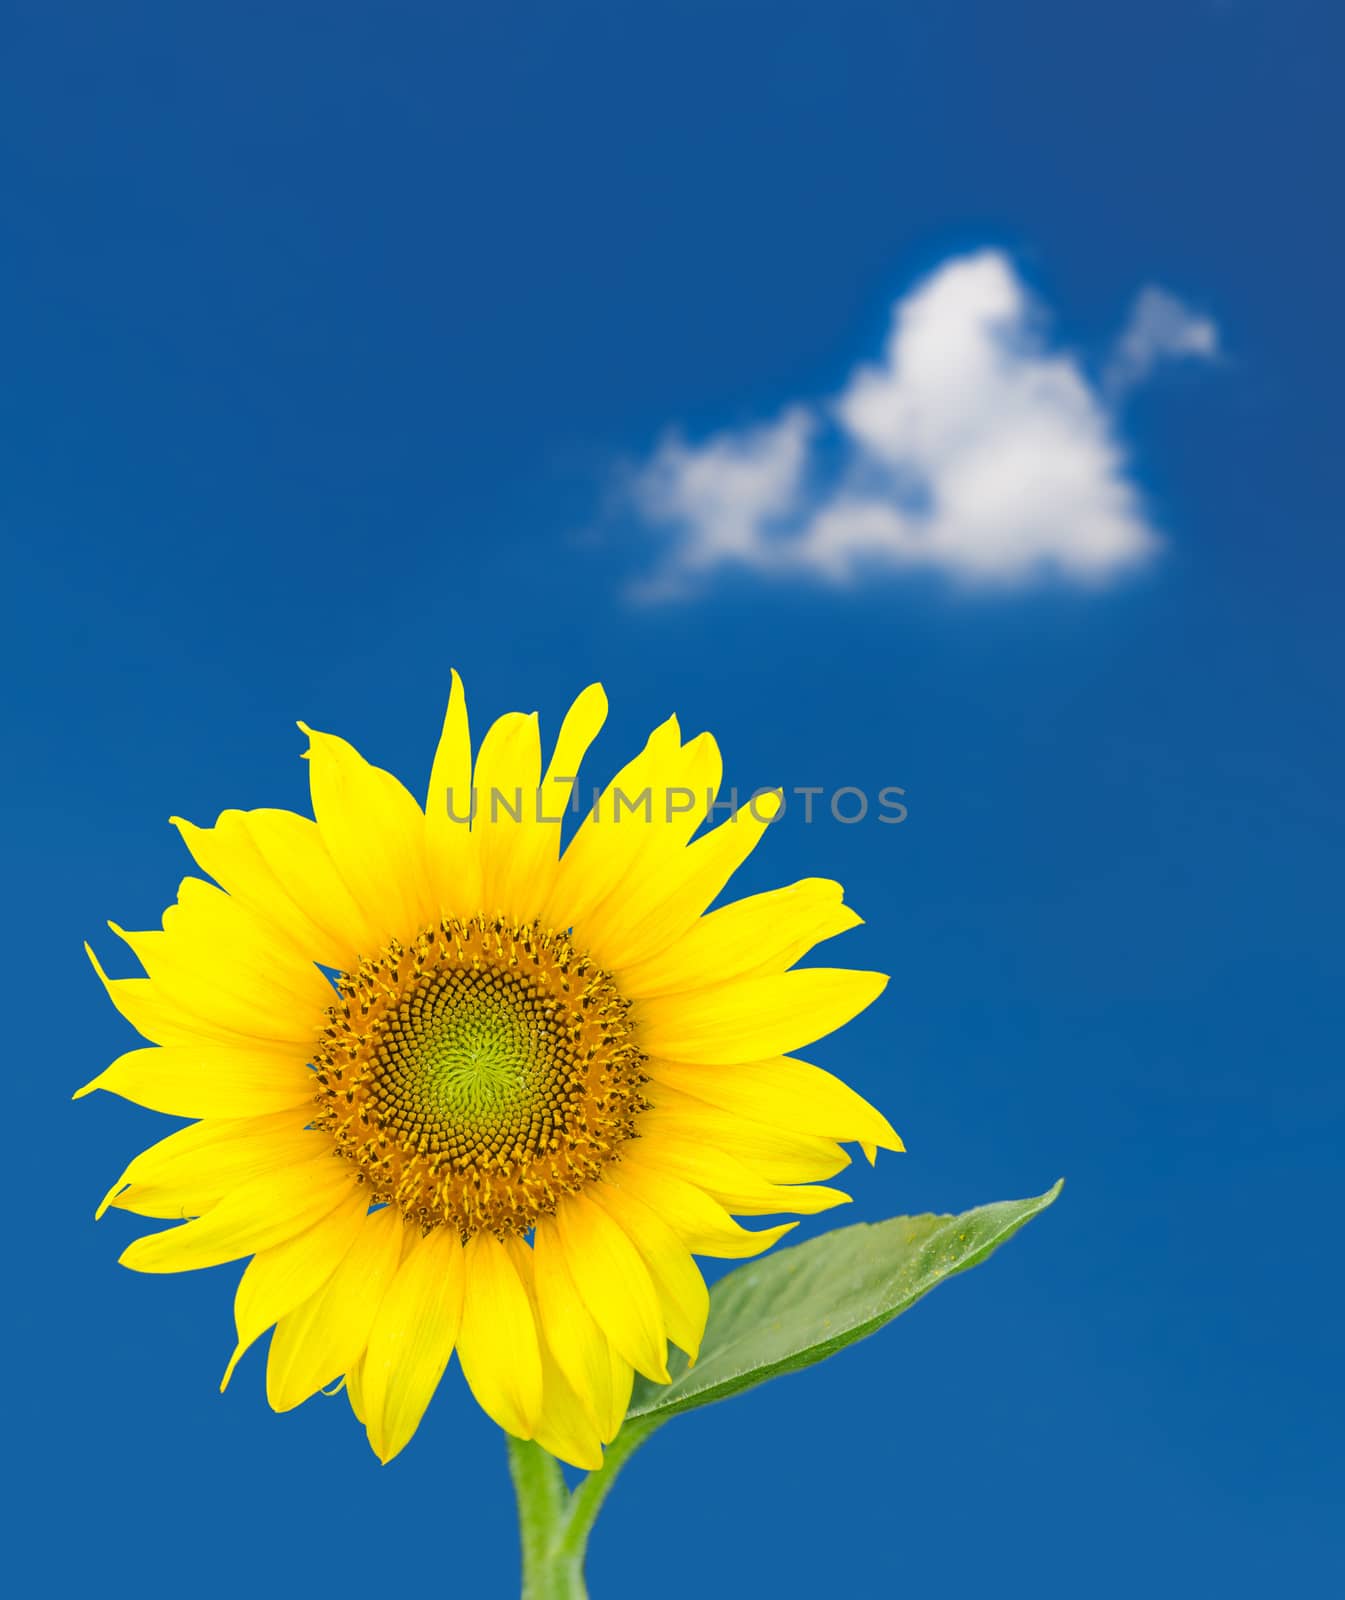 Single sunflower blossom against blue sky by steheap